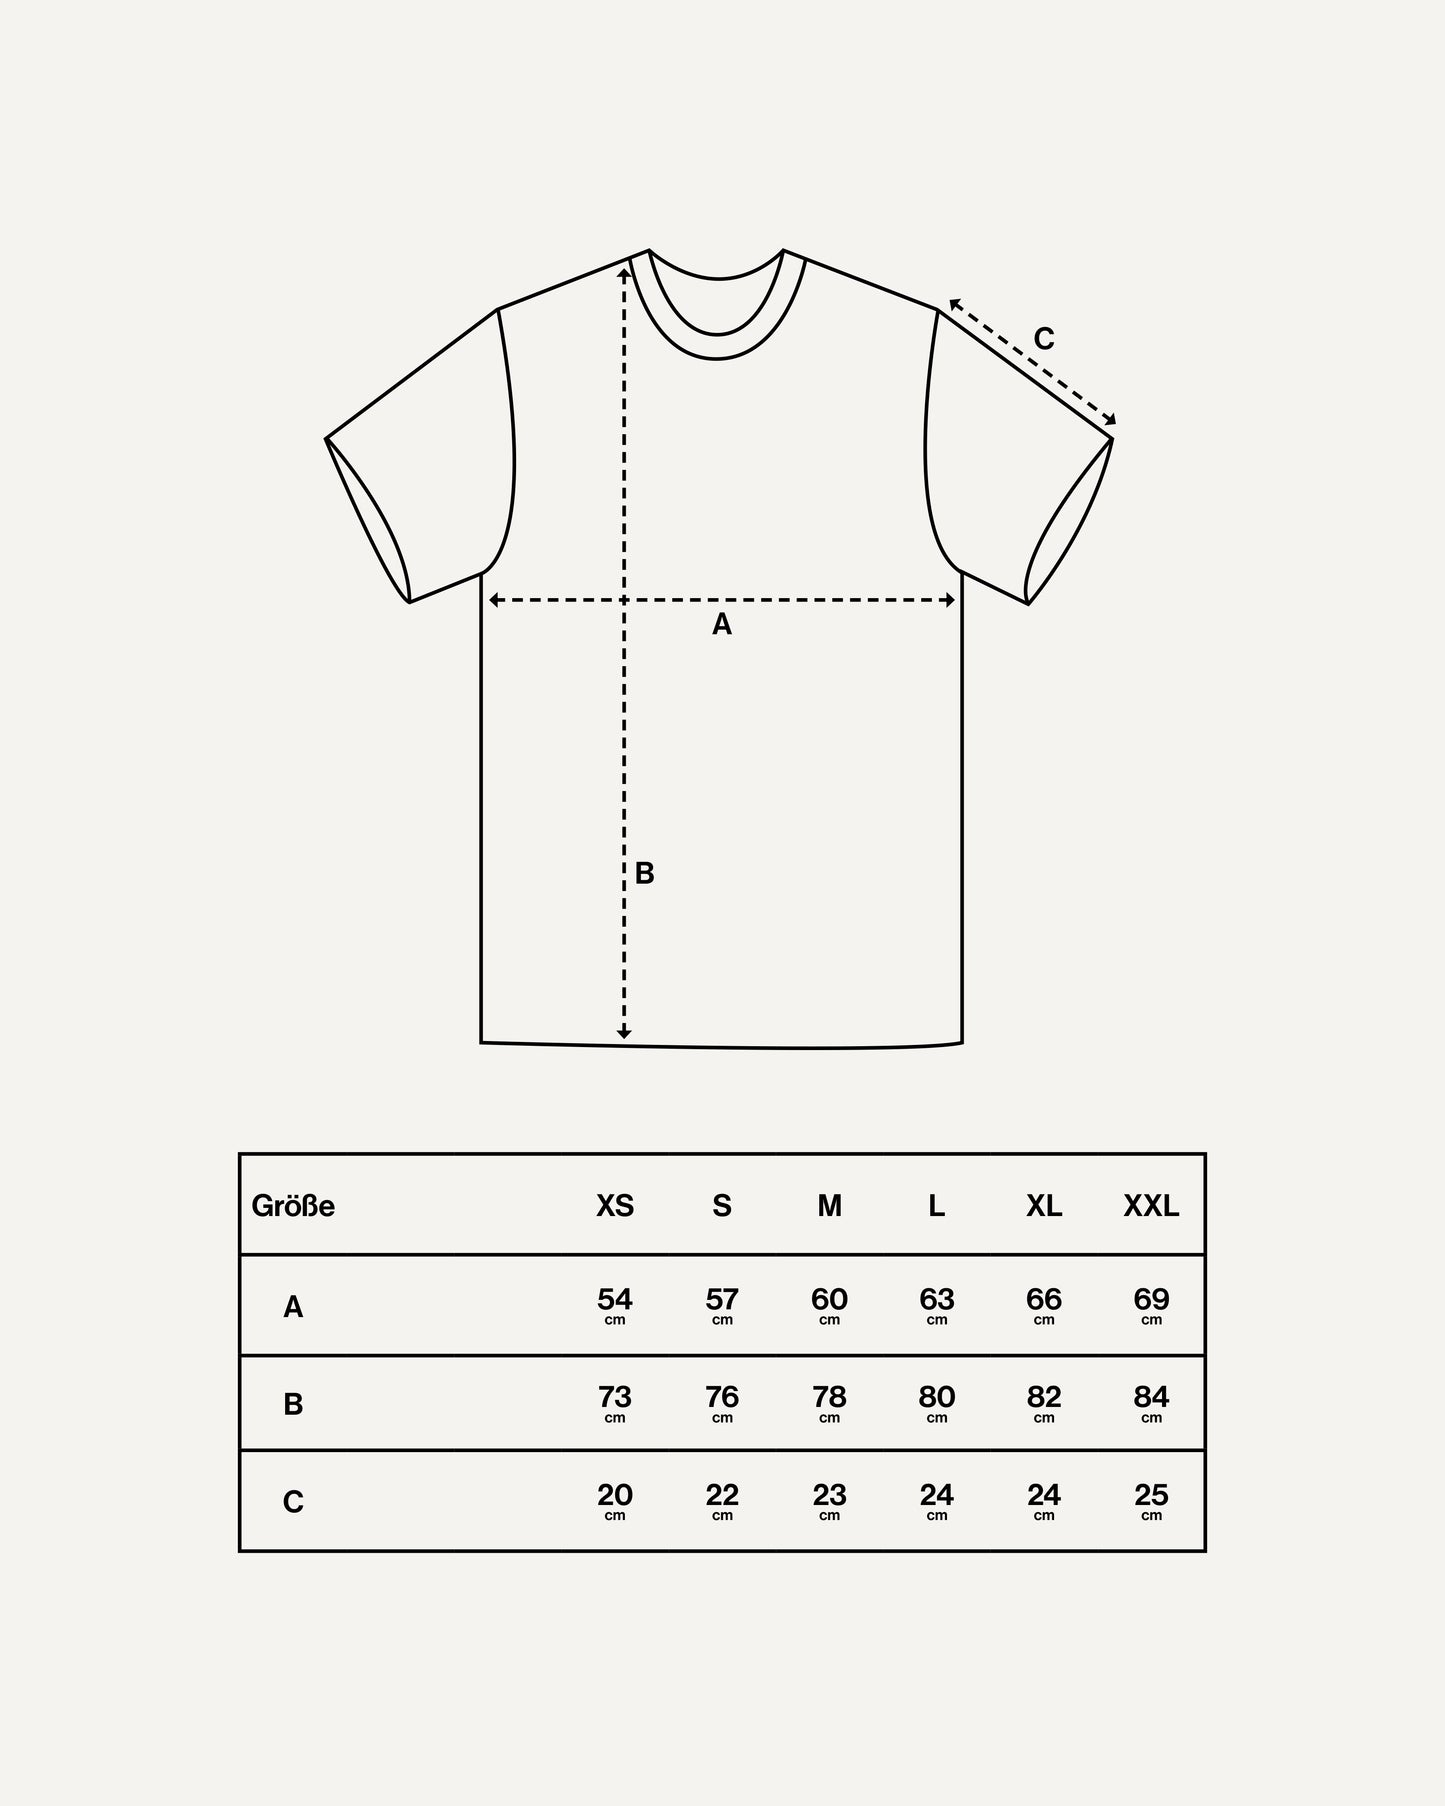 »SOUL FULL OF SHUNSHINE« Unisex Oversized T-Shirt Weiß